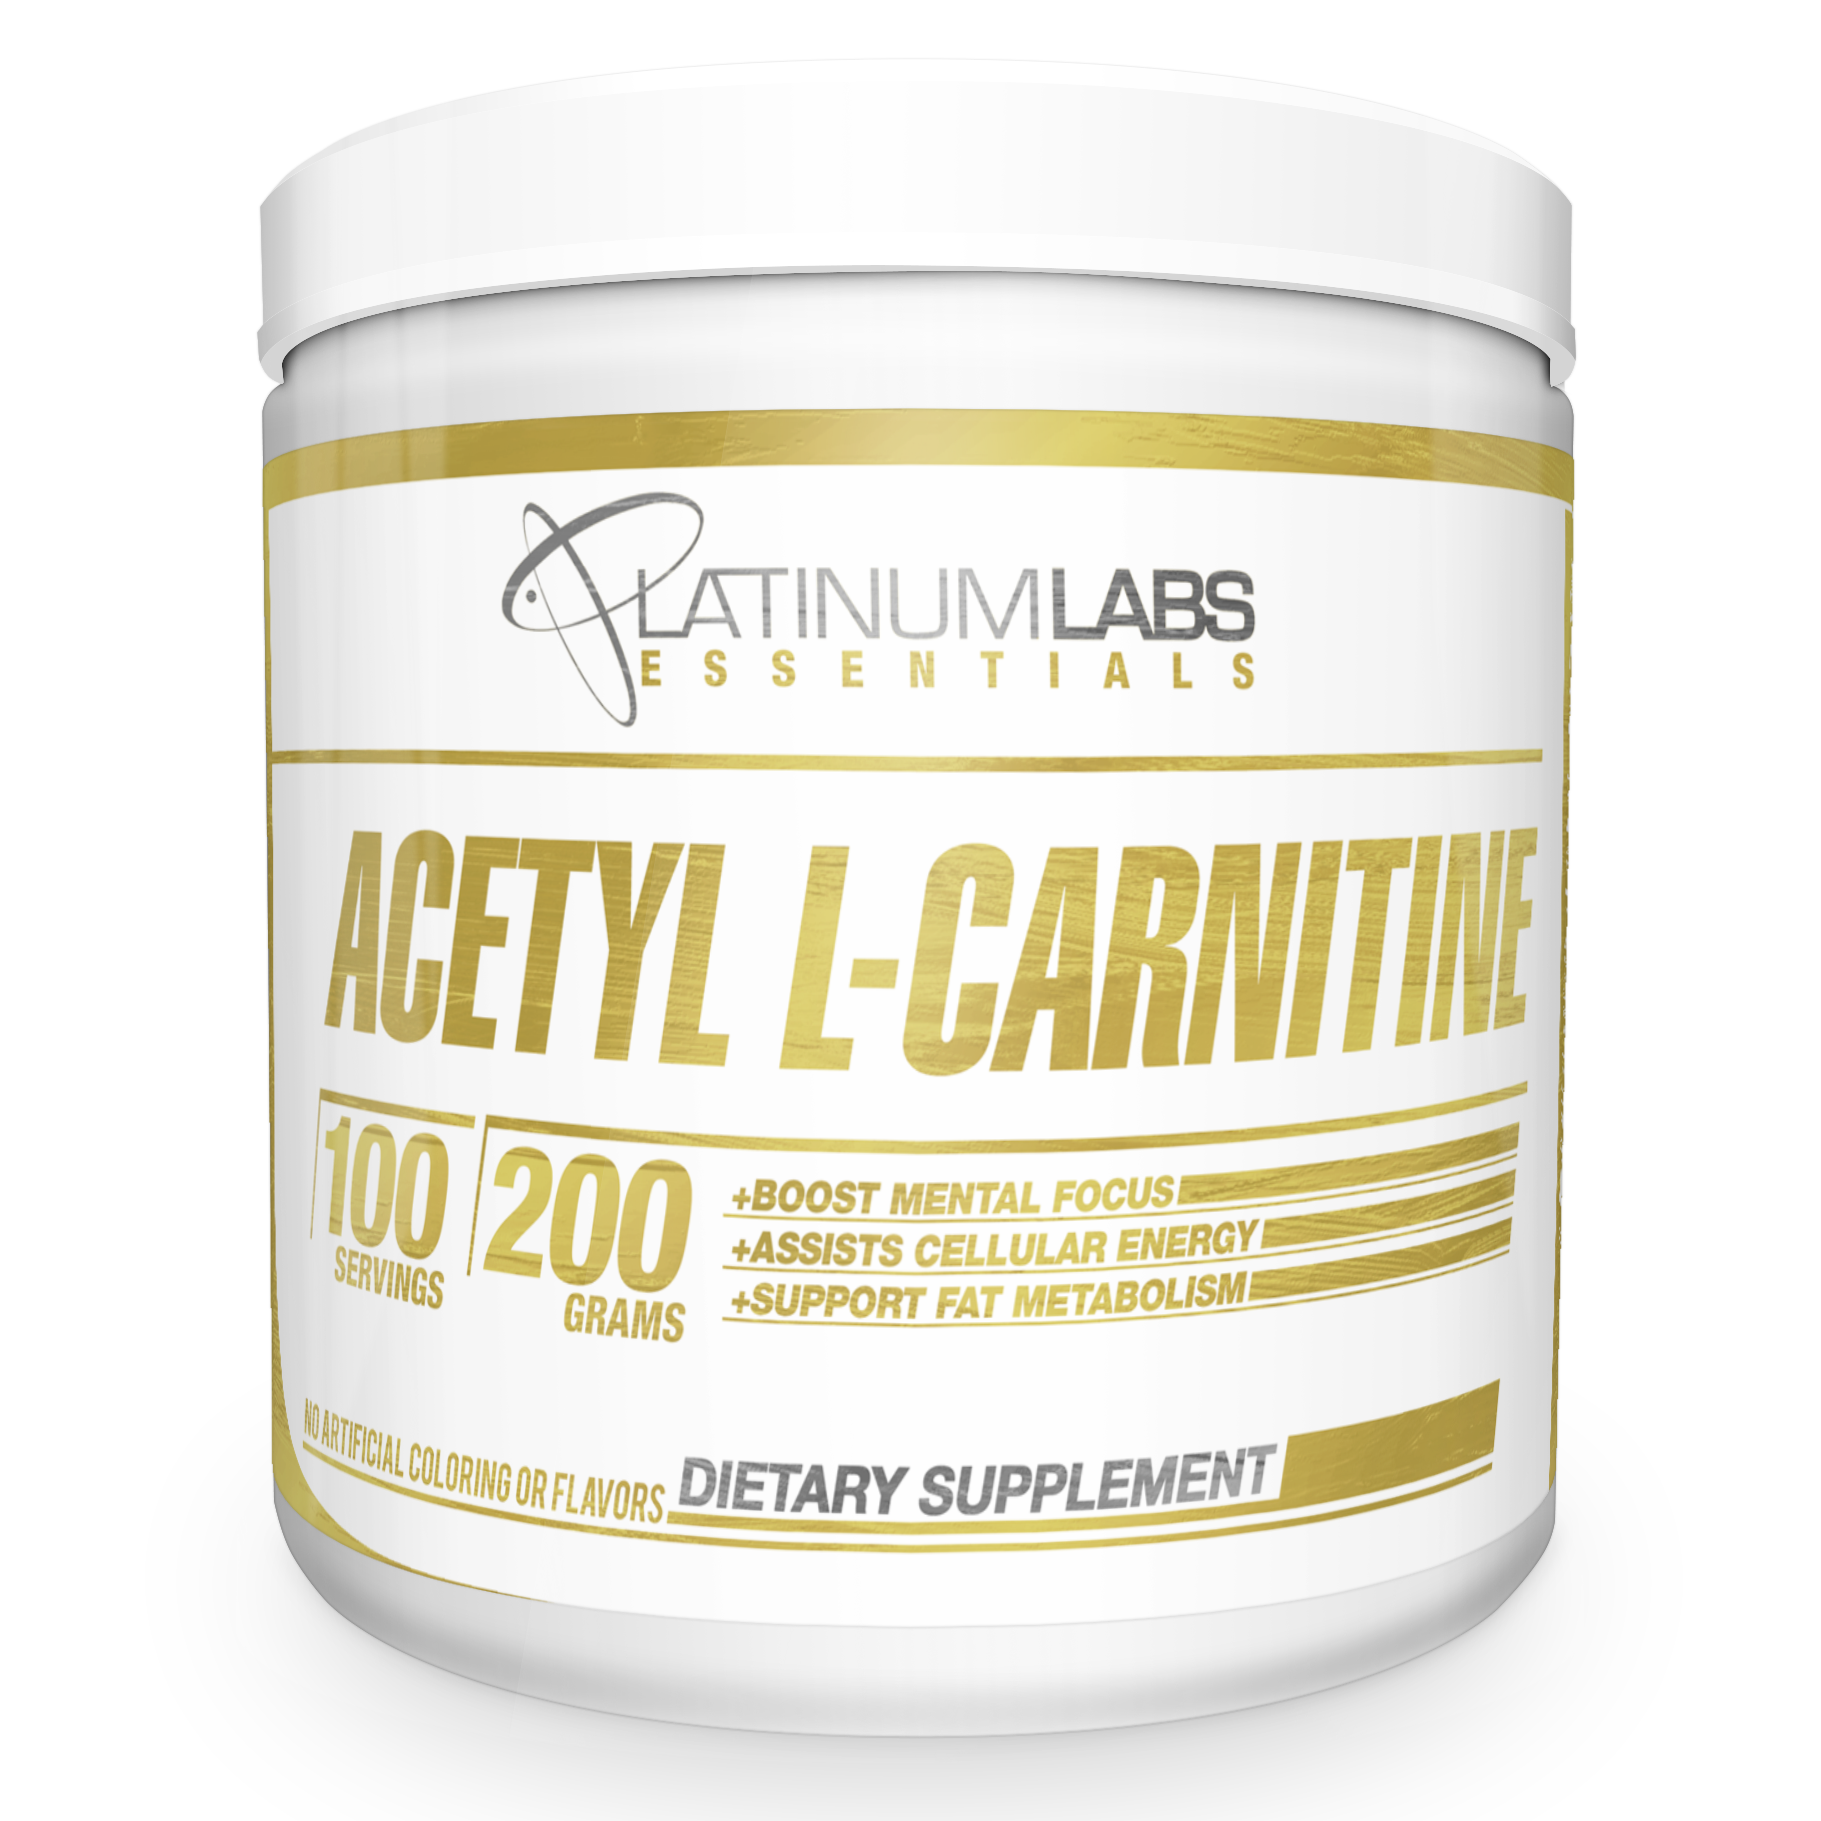 Platinum Labs Acetyl-L-Carnitine